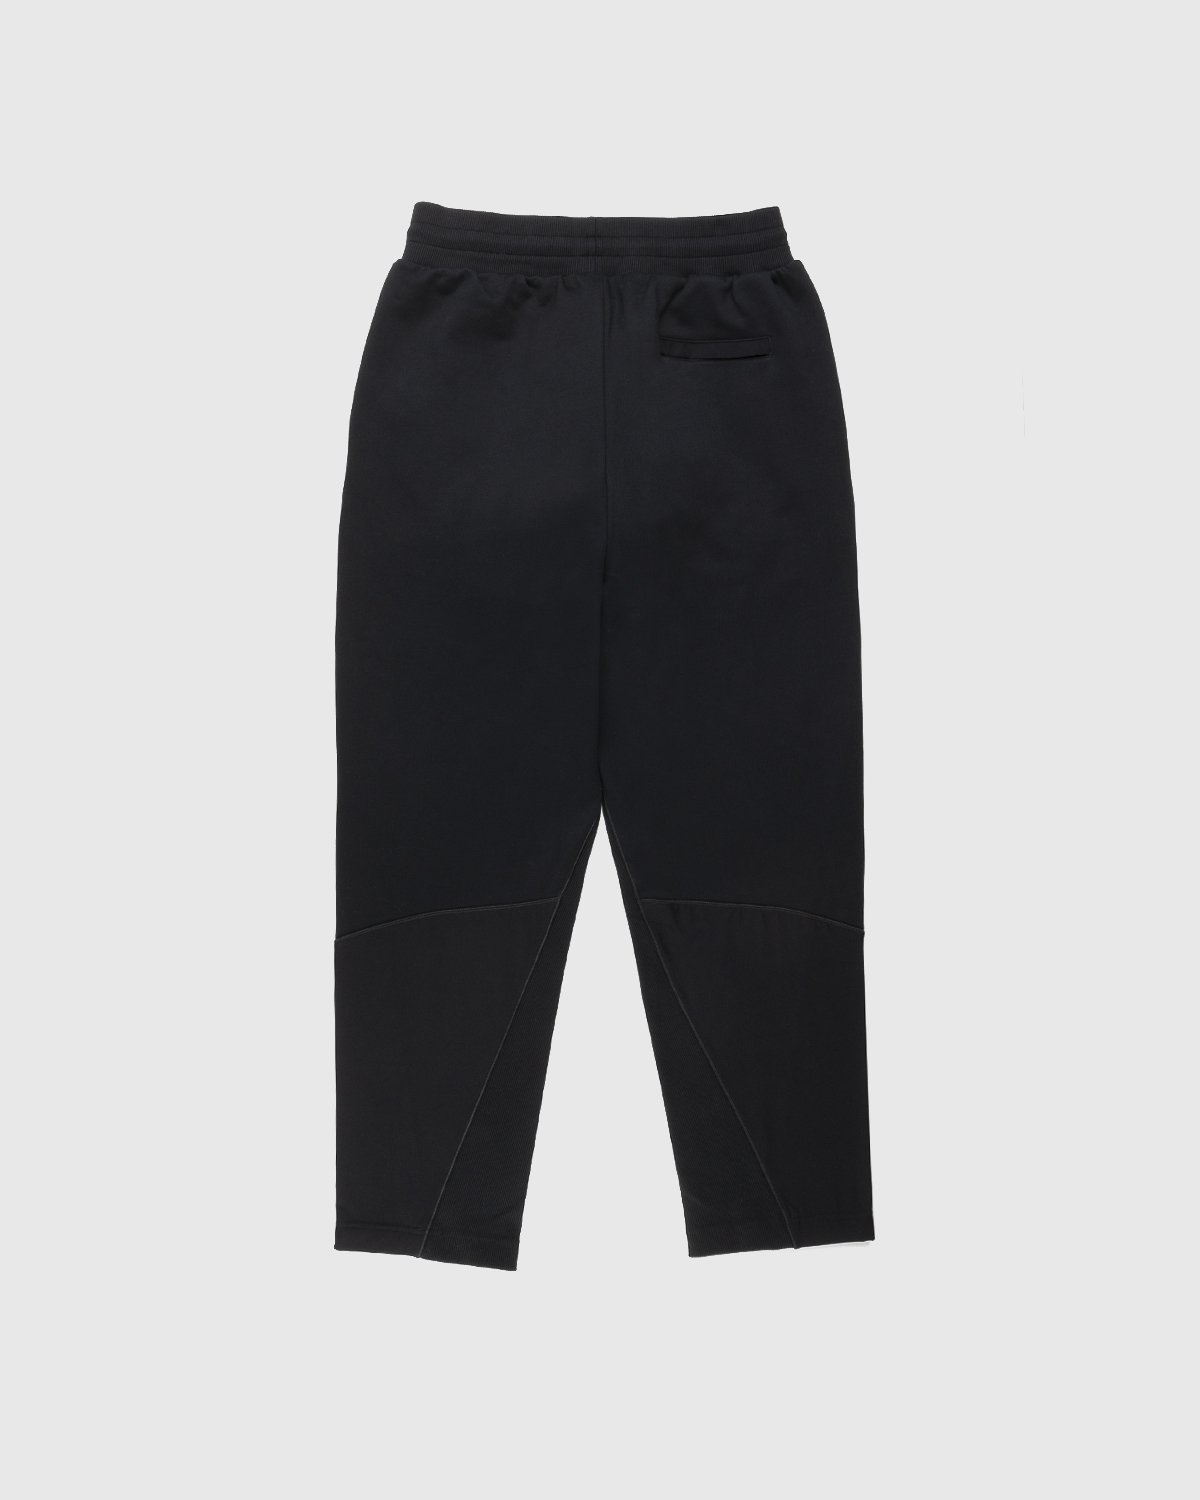 A-Cold-Wall* - Granular Sweatpants Black - Clothing - Black - Image 2